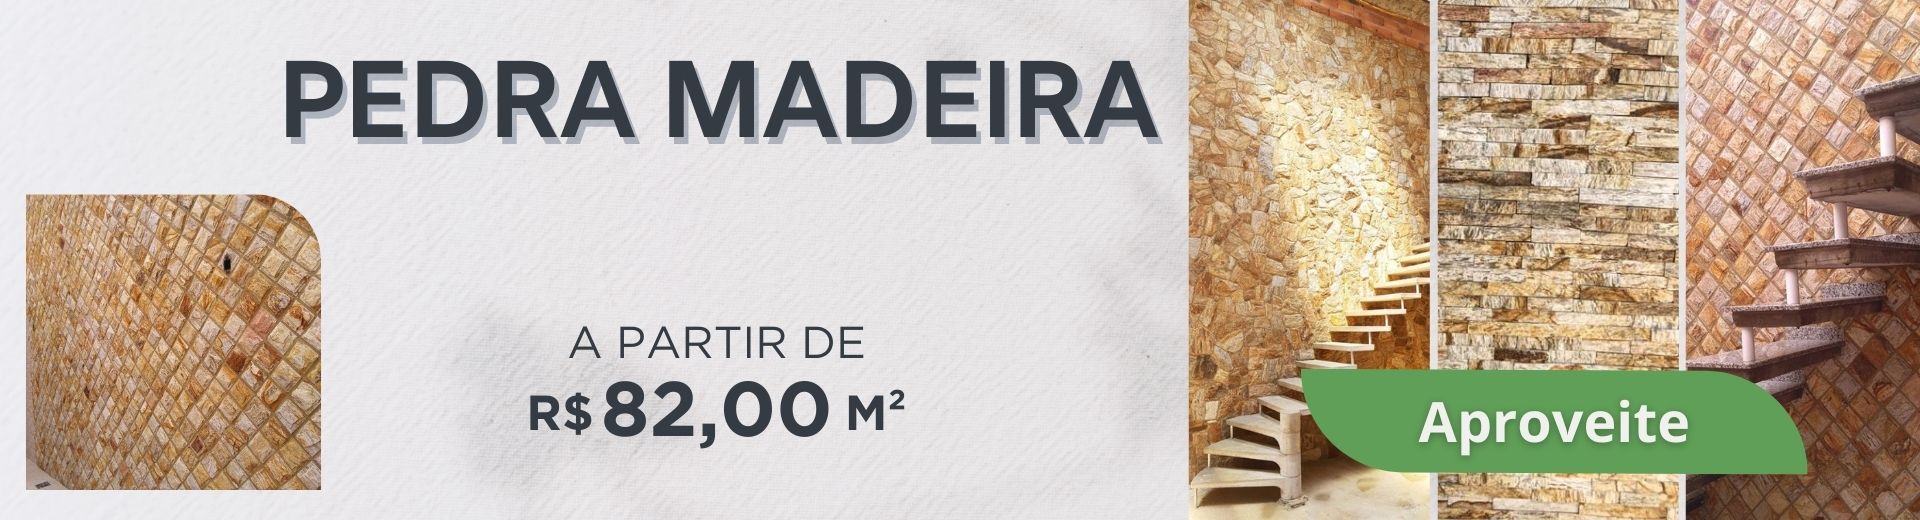 Pedra Madeira